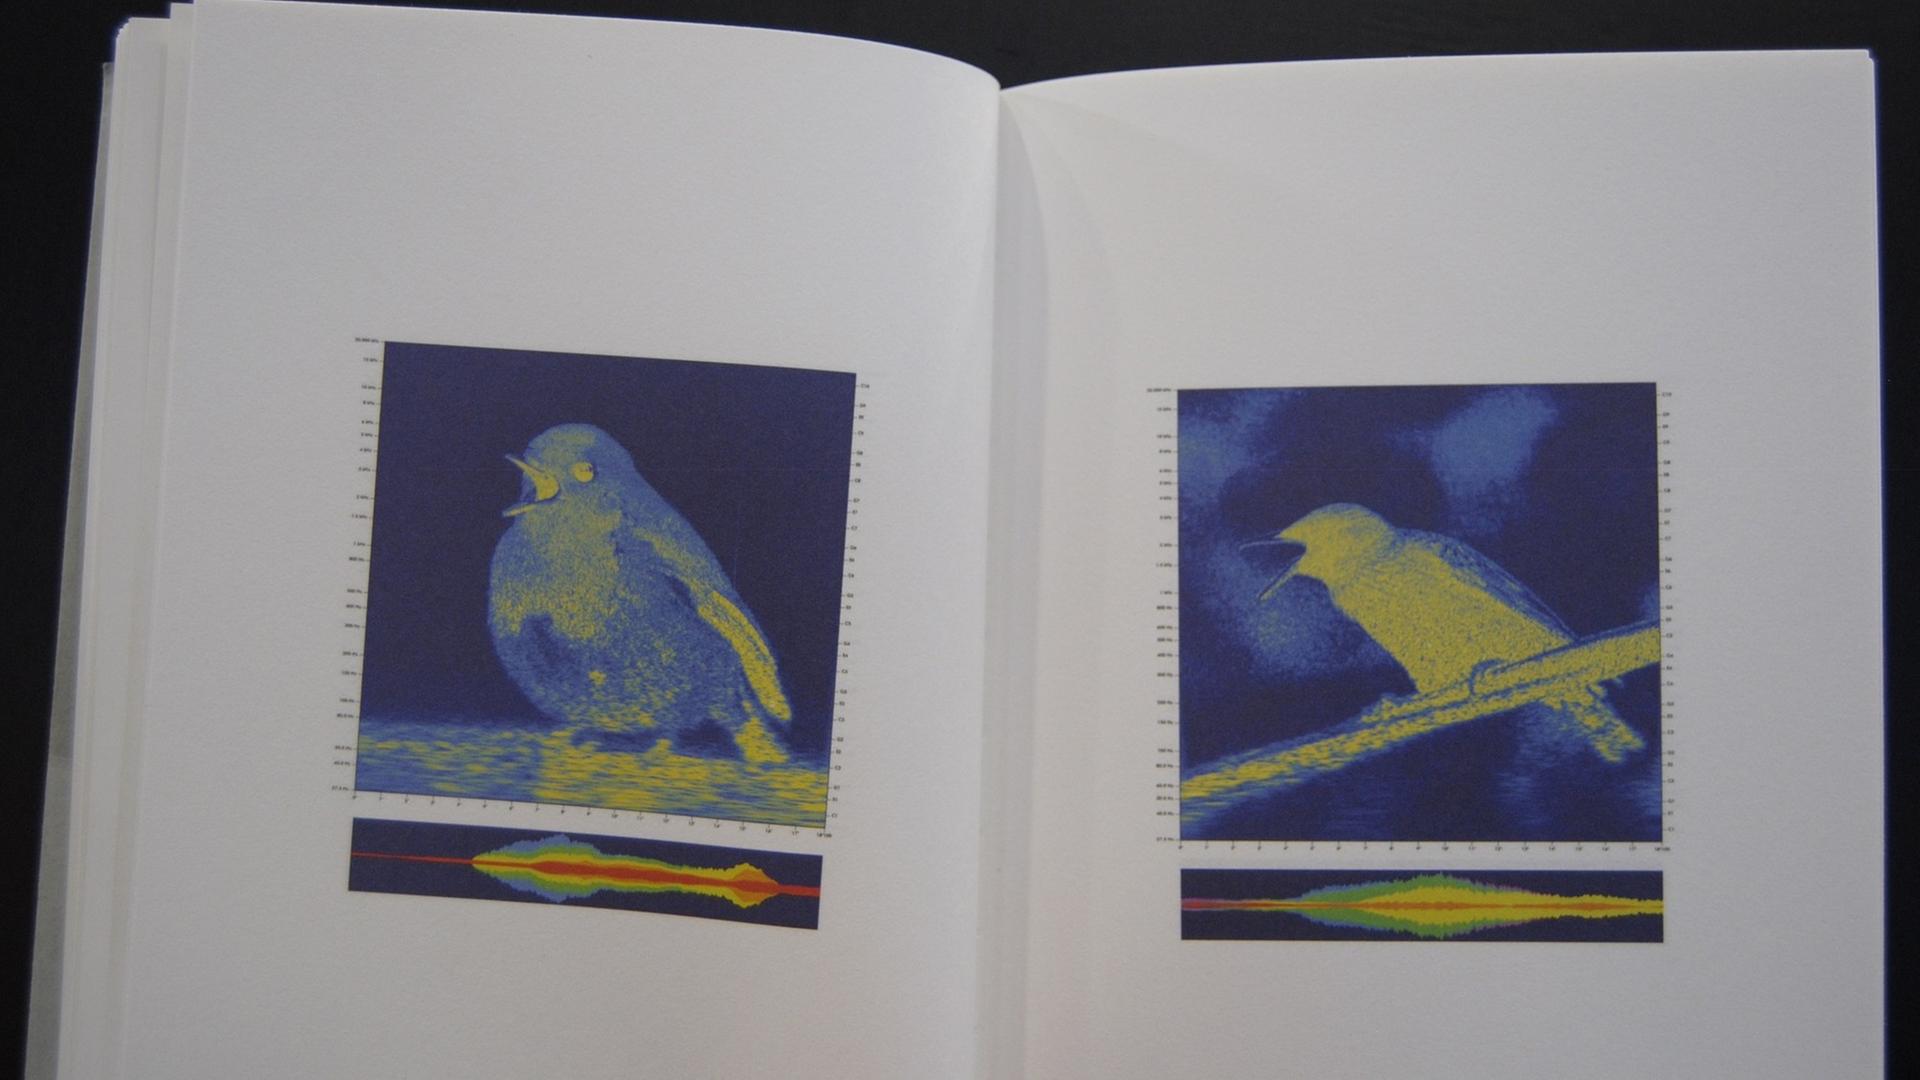 Schönst Buch 2017 "Ornithology"